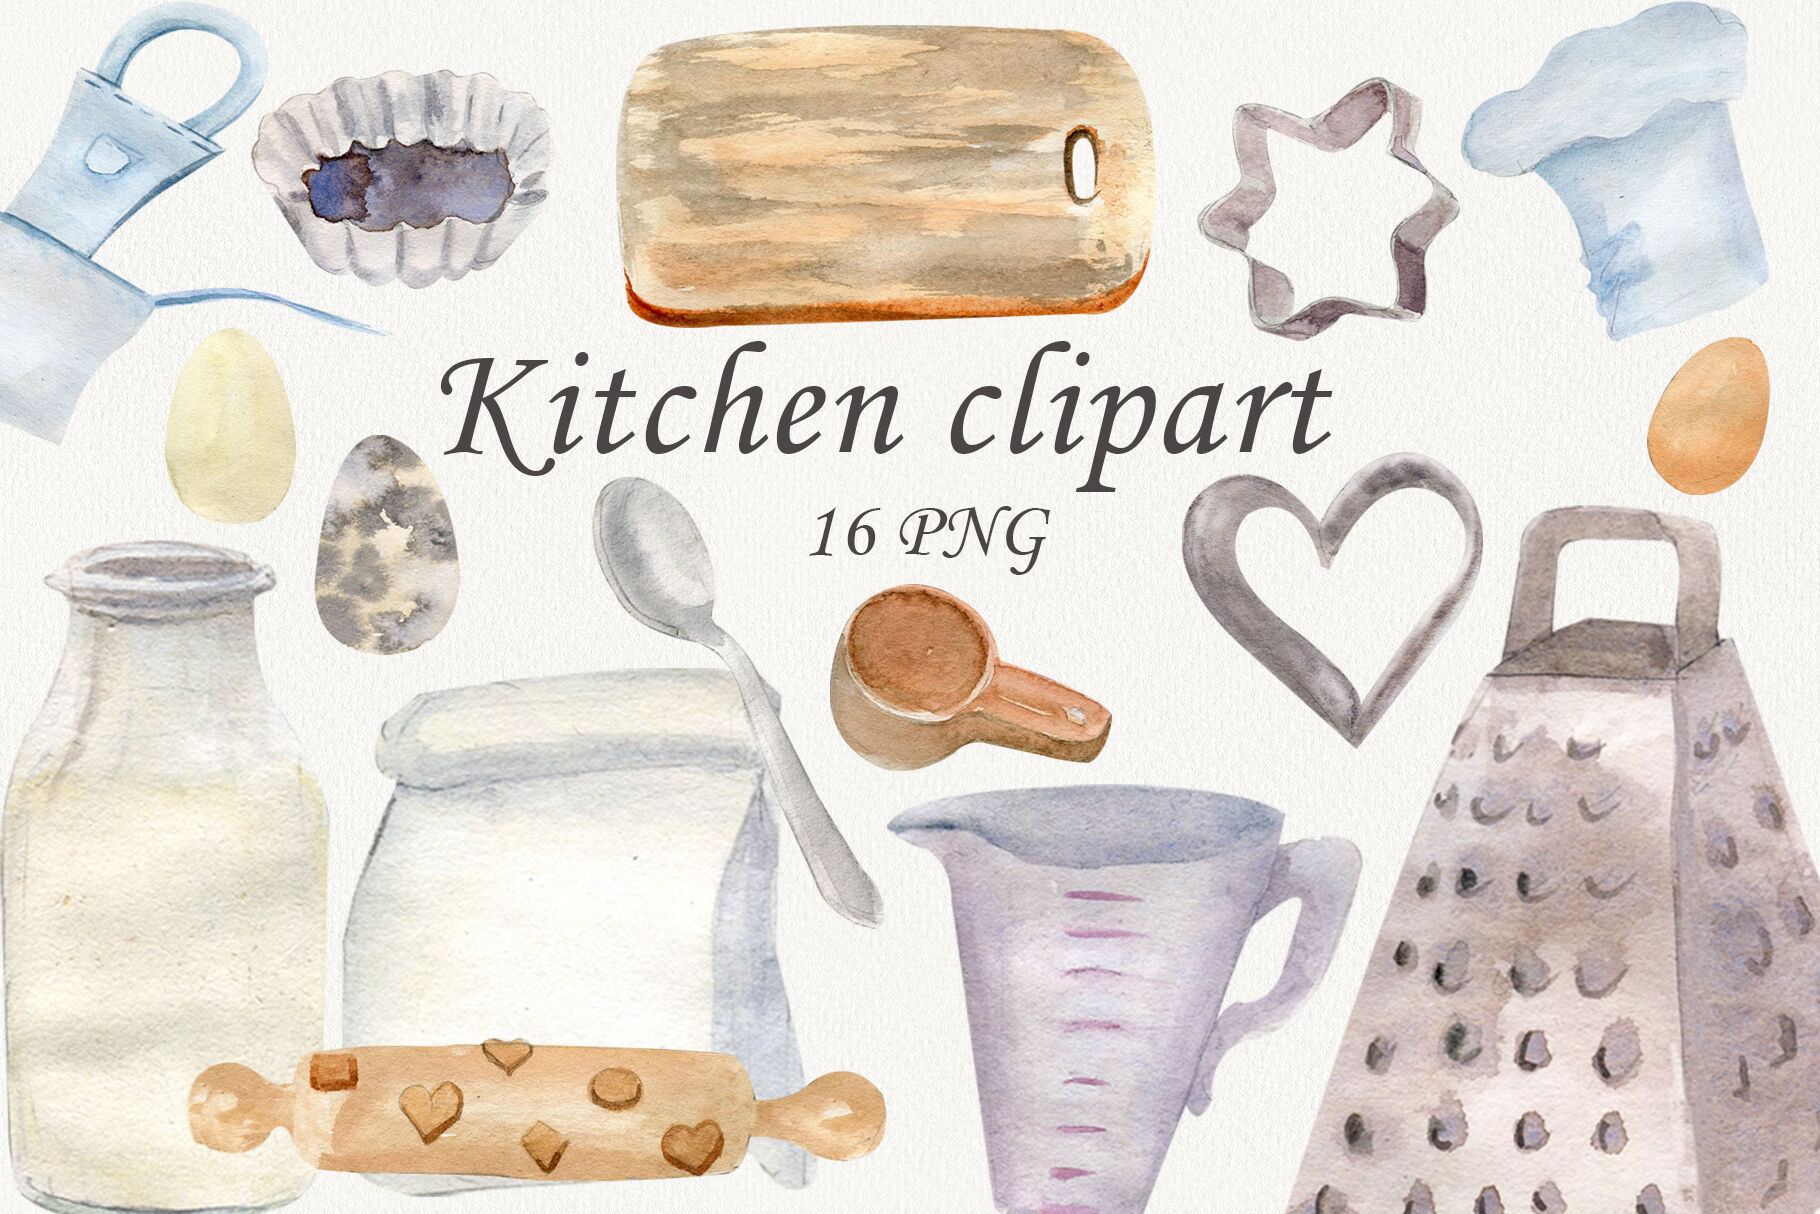 https://media1.thehungryjpeg.com/thumbs2/ori_3941721_nkco6inl1icsfnr4pjg7c35aq363zf6xuqty7ln8_kitchen-utensils-baking-clipart-watercolor-food-clip-art.jpg